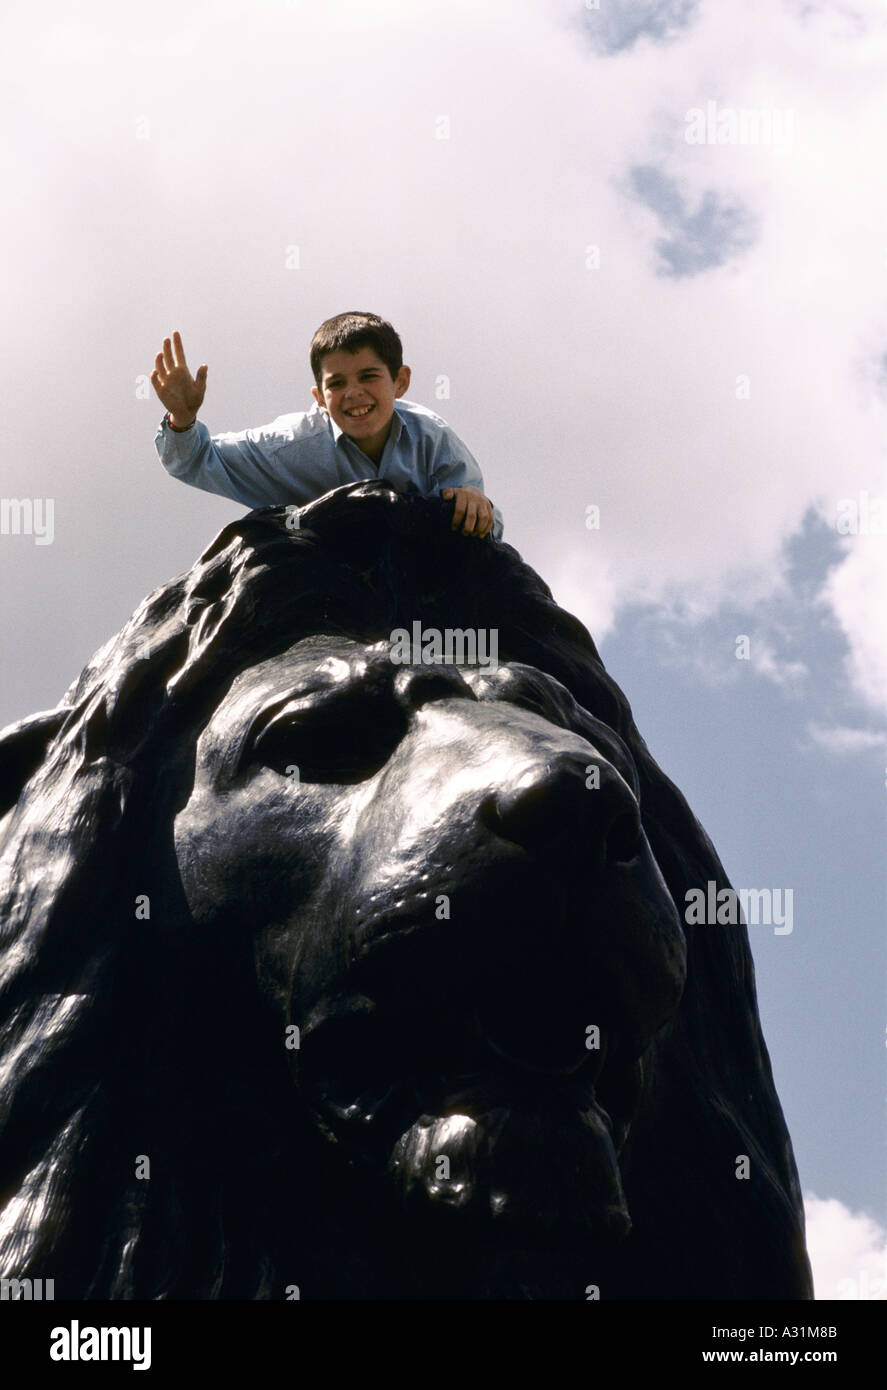 boy on top of lion statue in 'Trafalgar Square' Stock Photo